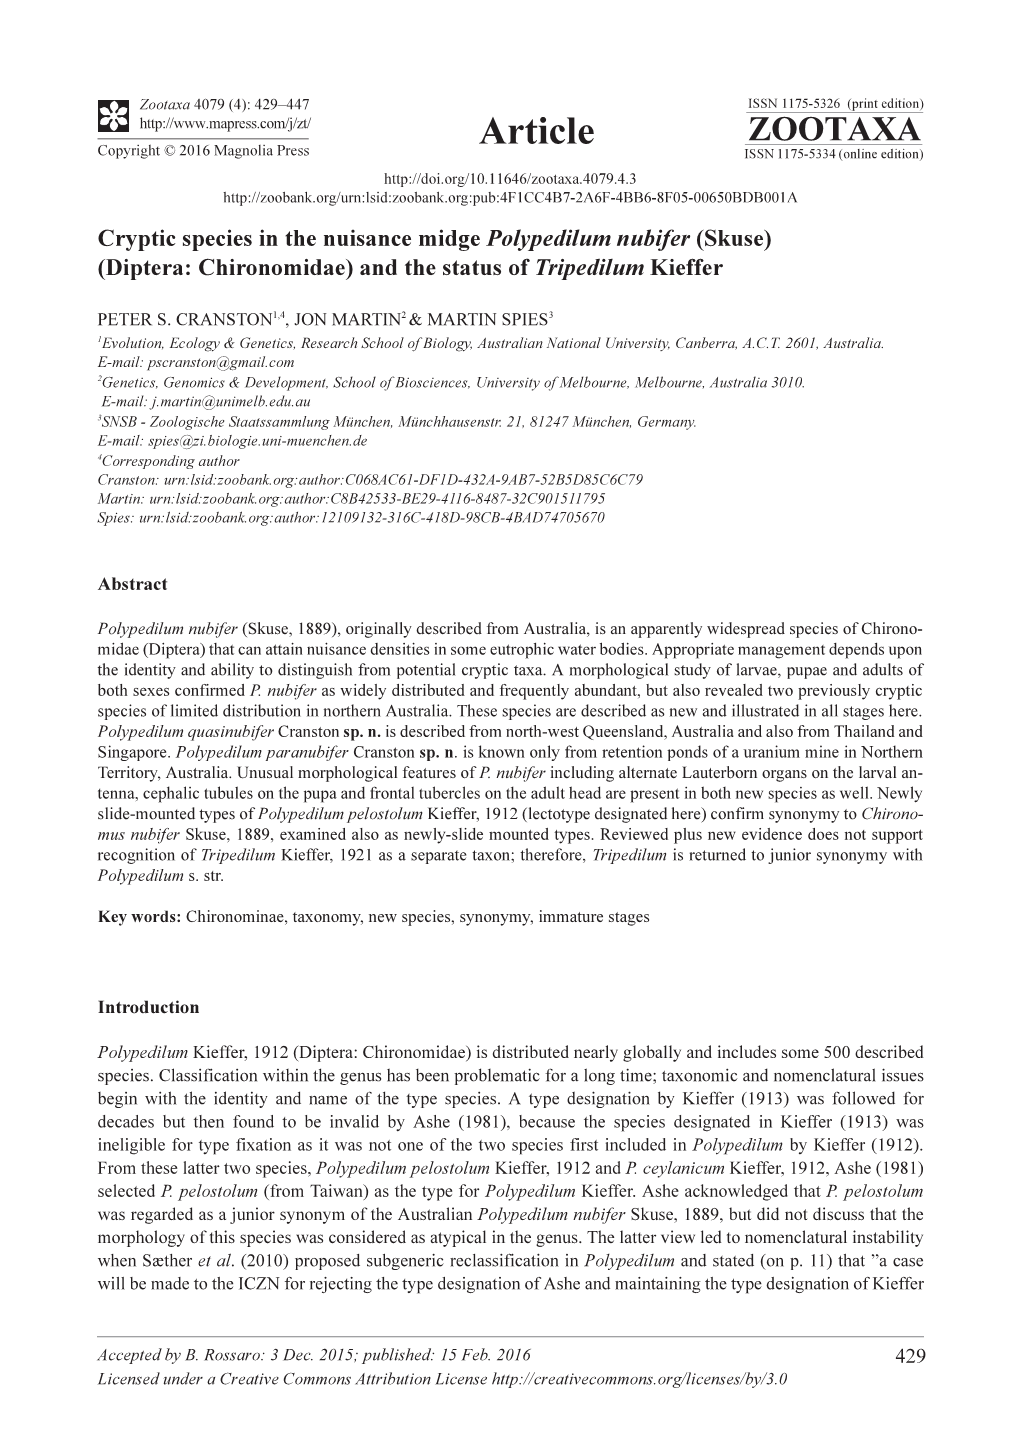 Cryptic Species in the Nuisance Midge Polypedilum Nubifer (Skuse) (Diptera: Chironomidae) and the Status of Tripedilum Kieffer